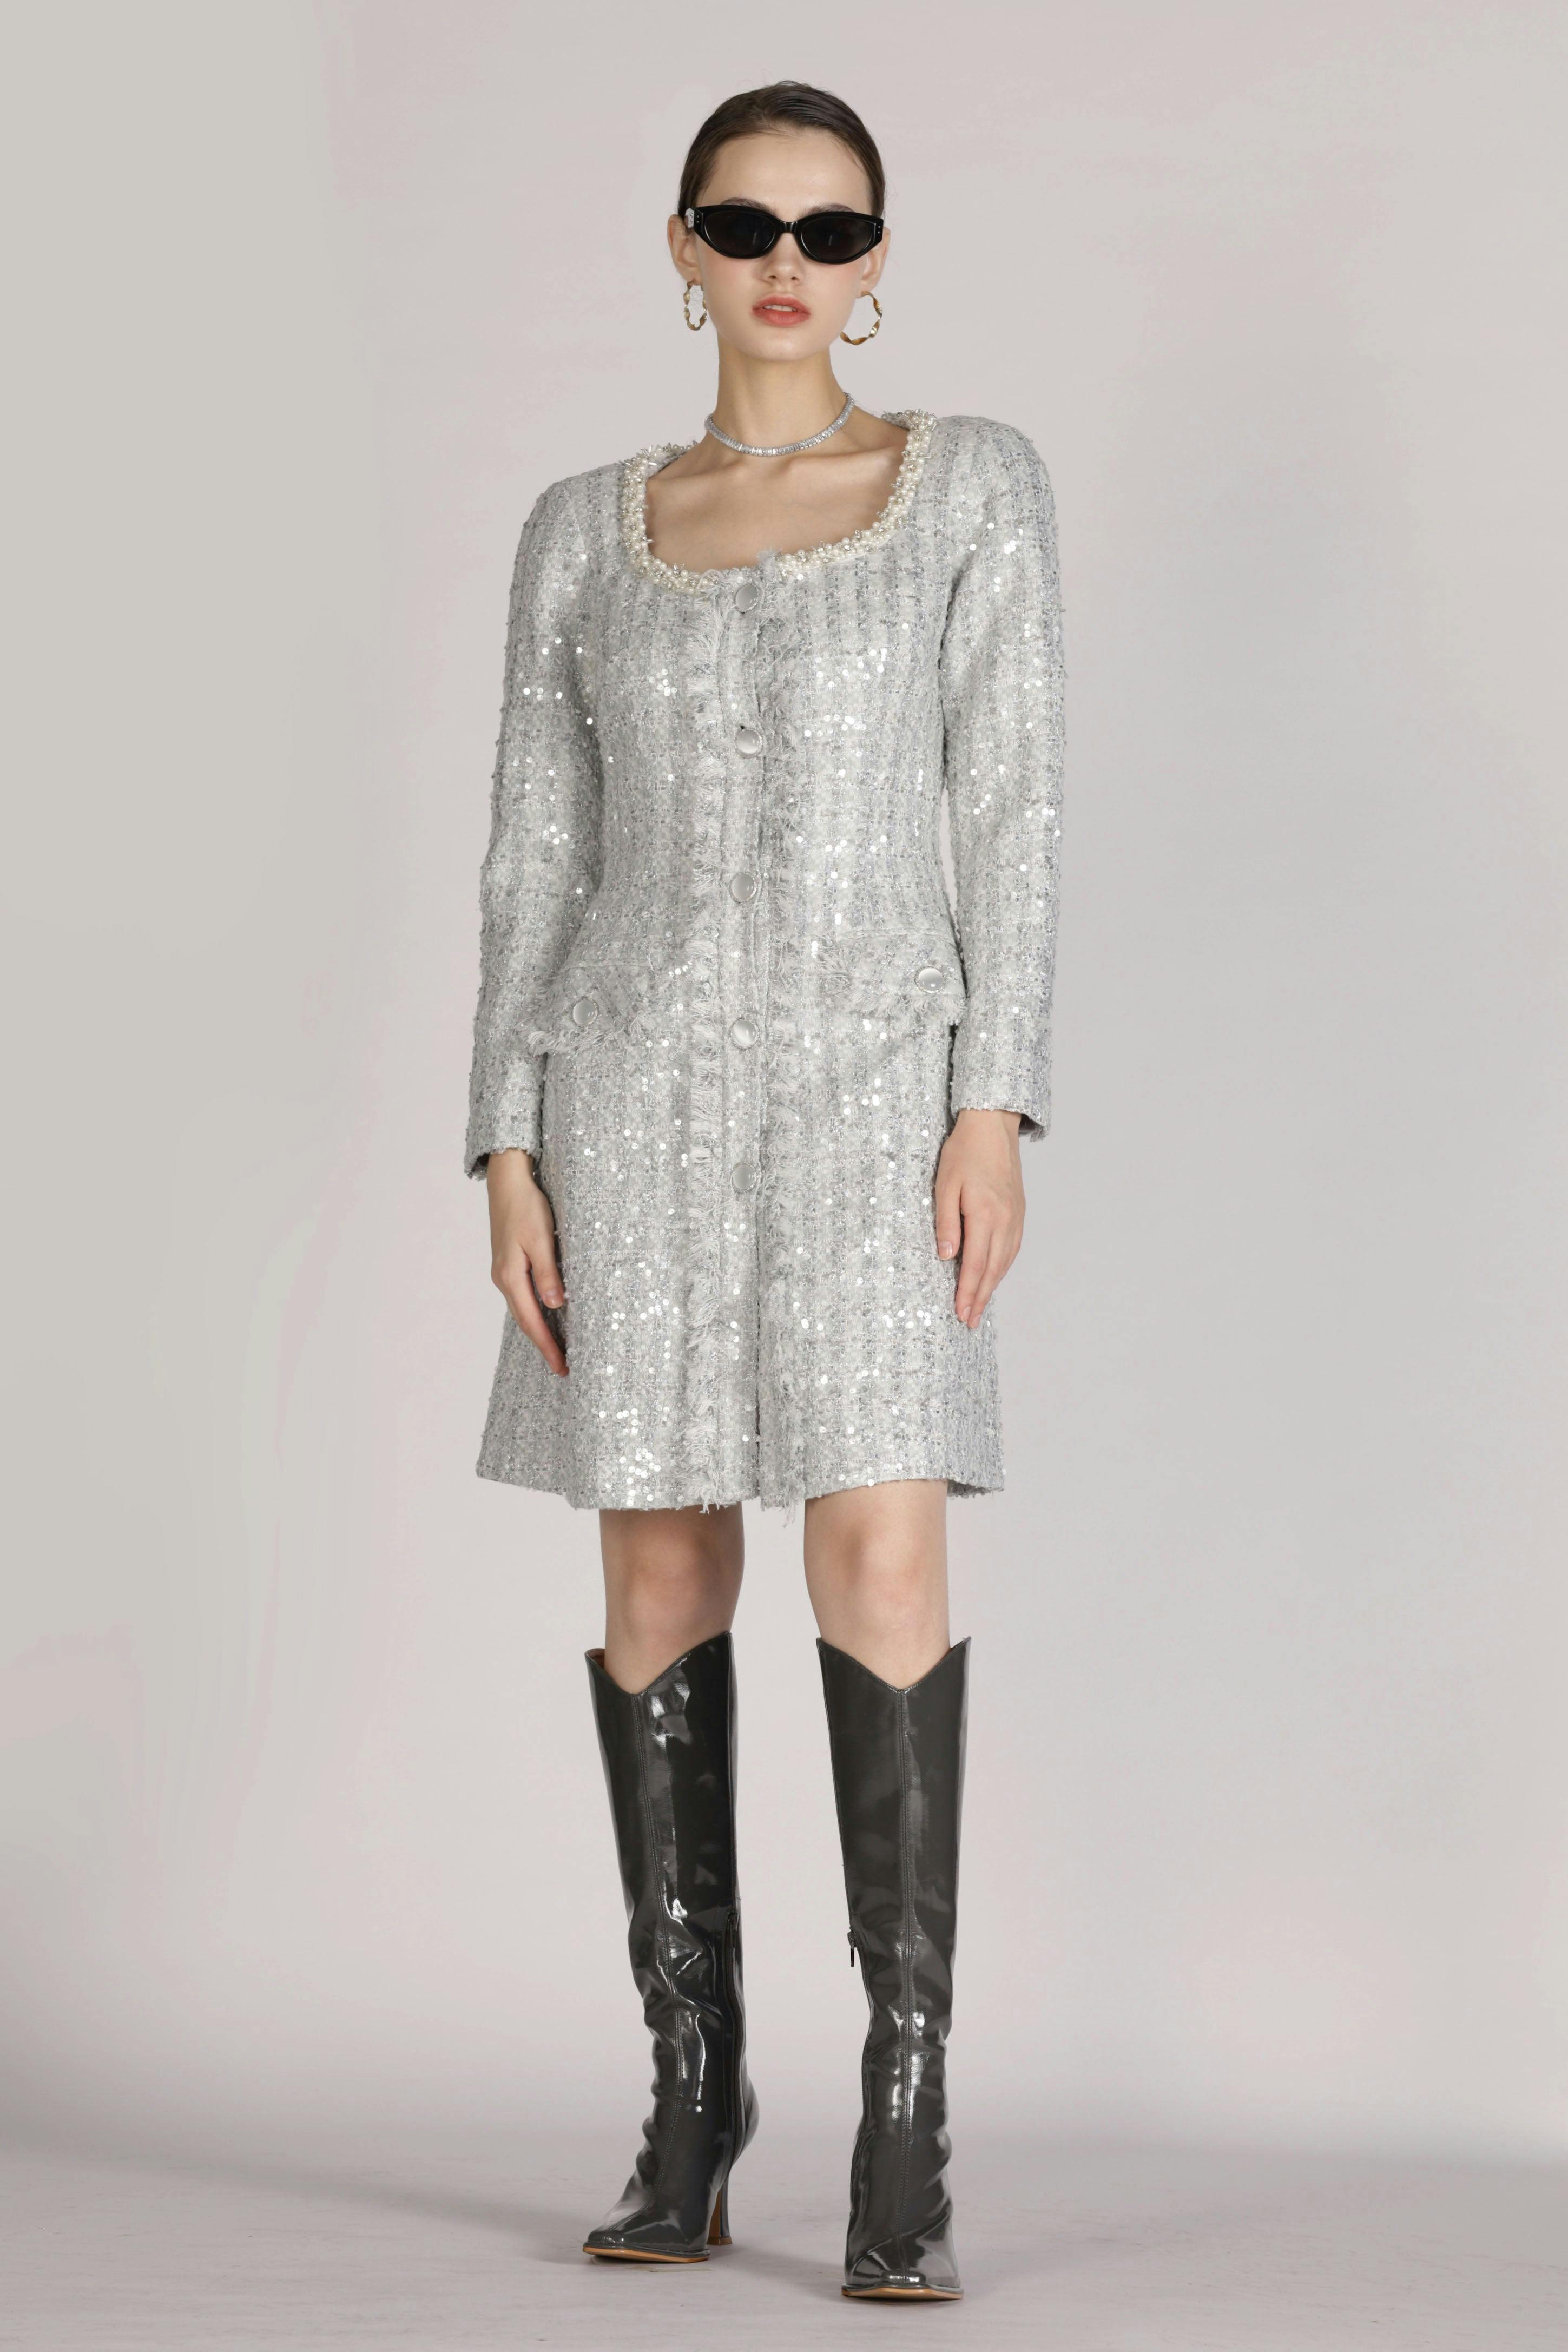 cat-eye tweed dress, a product by SZMAN